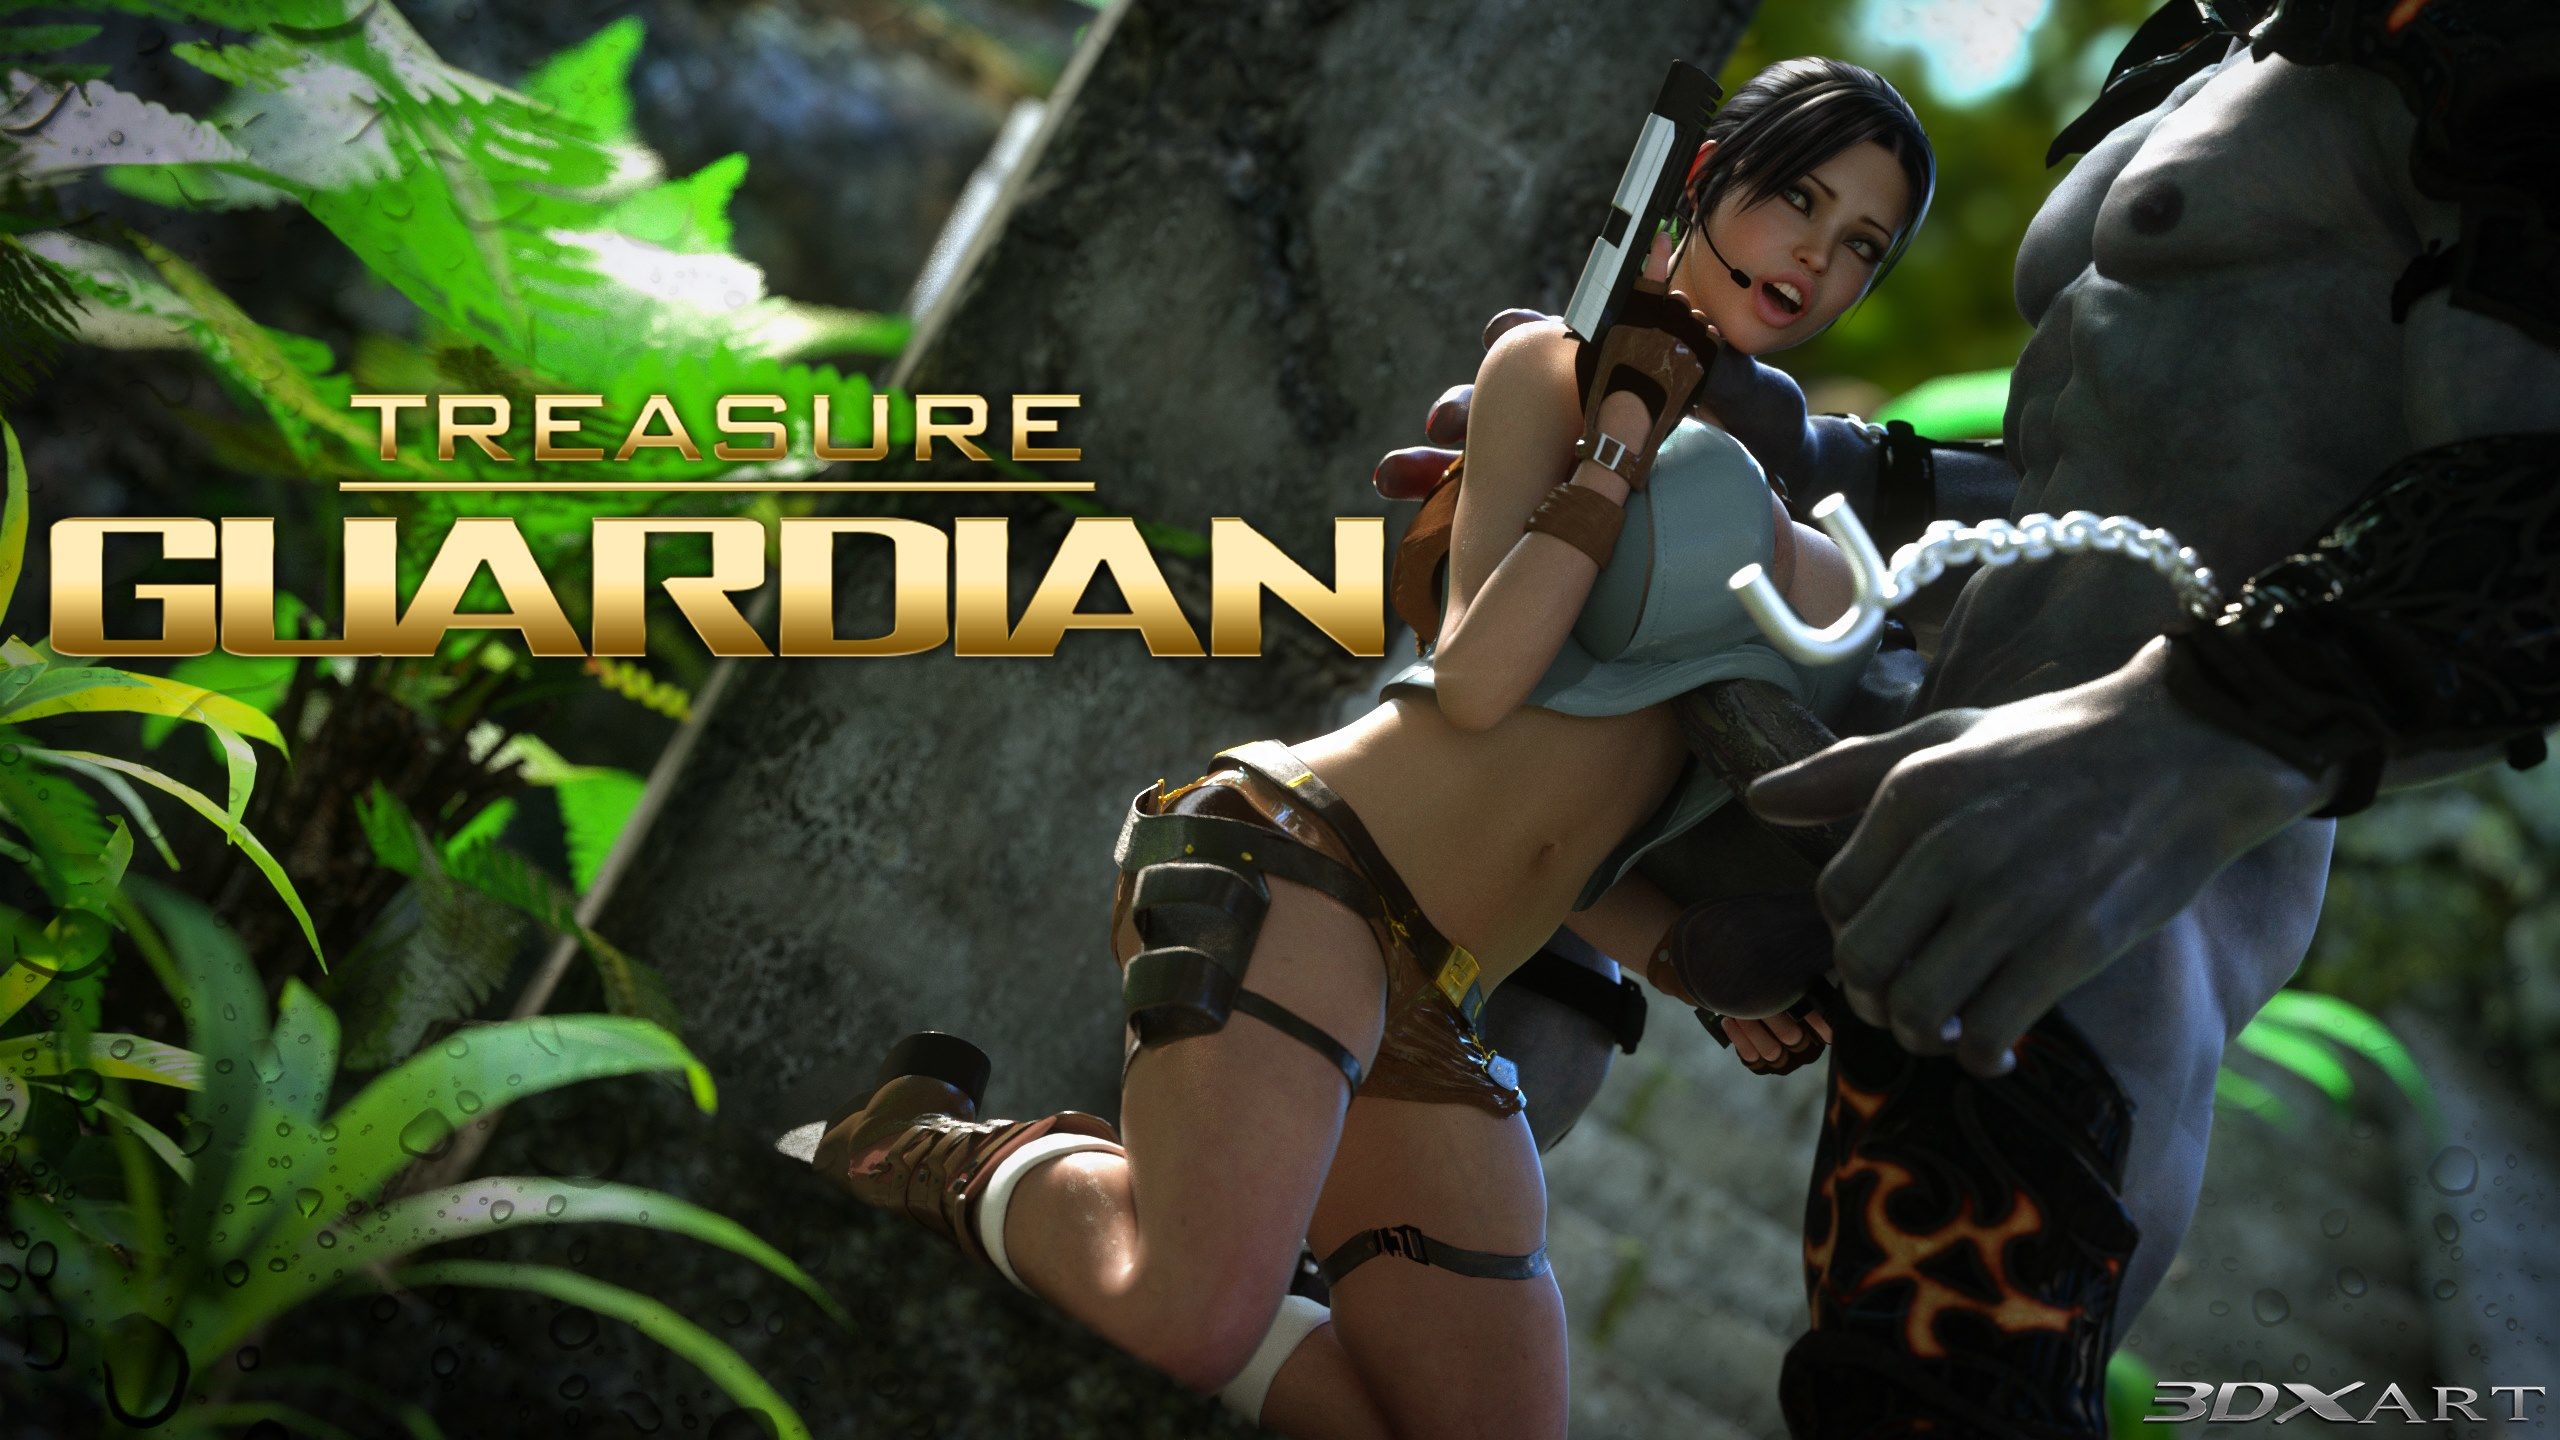 Treasure Gaurdian Tomb Raider (3DXArt) page 1